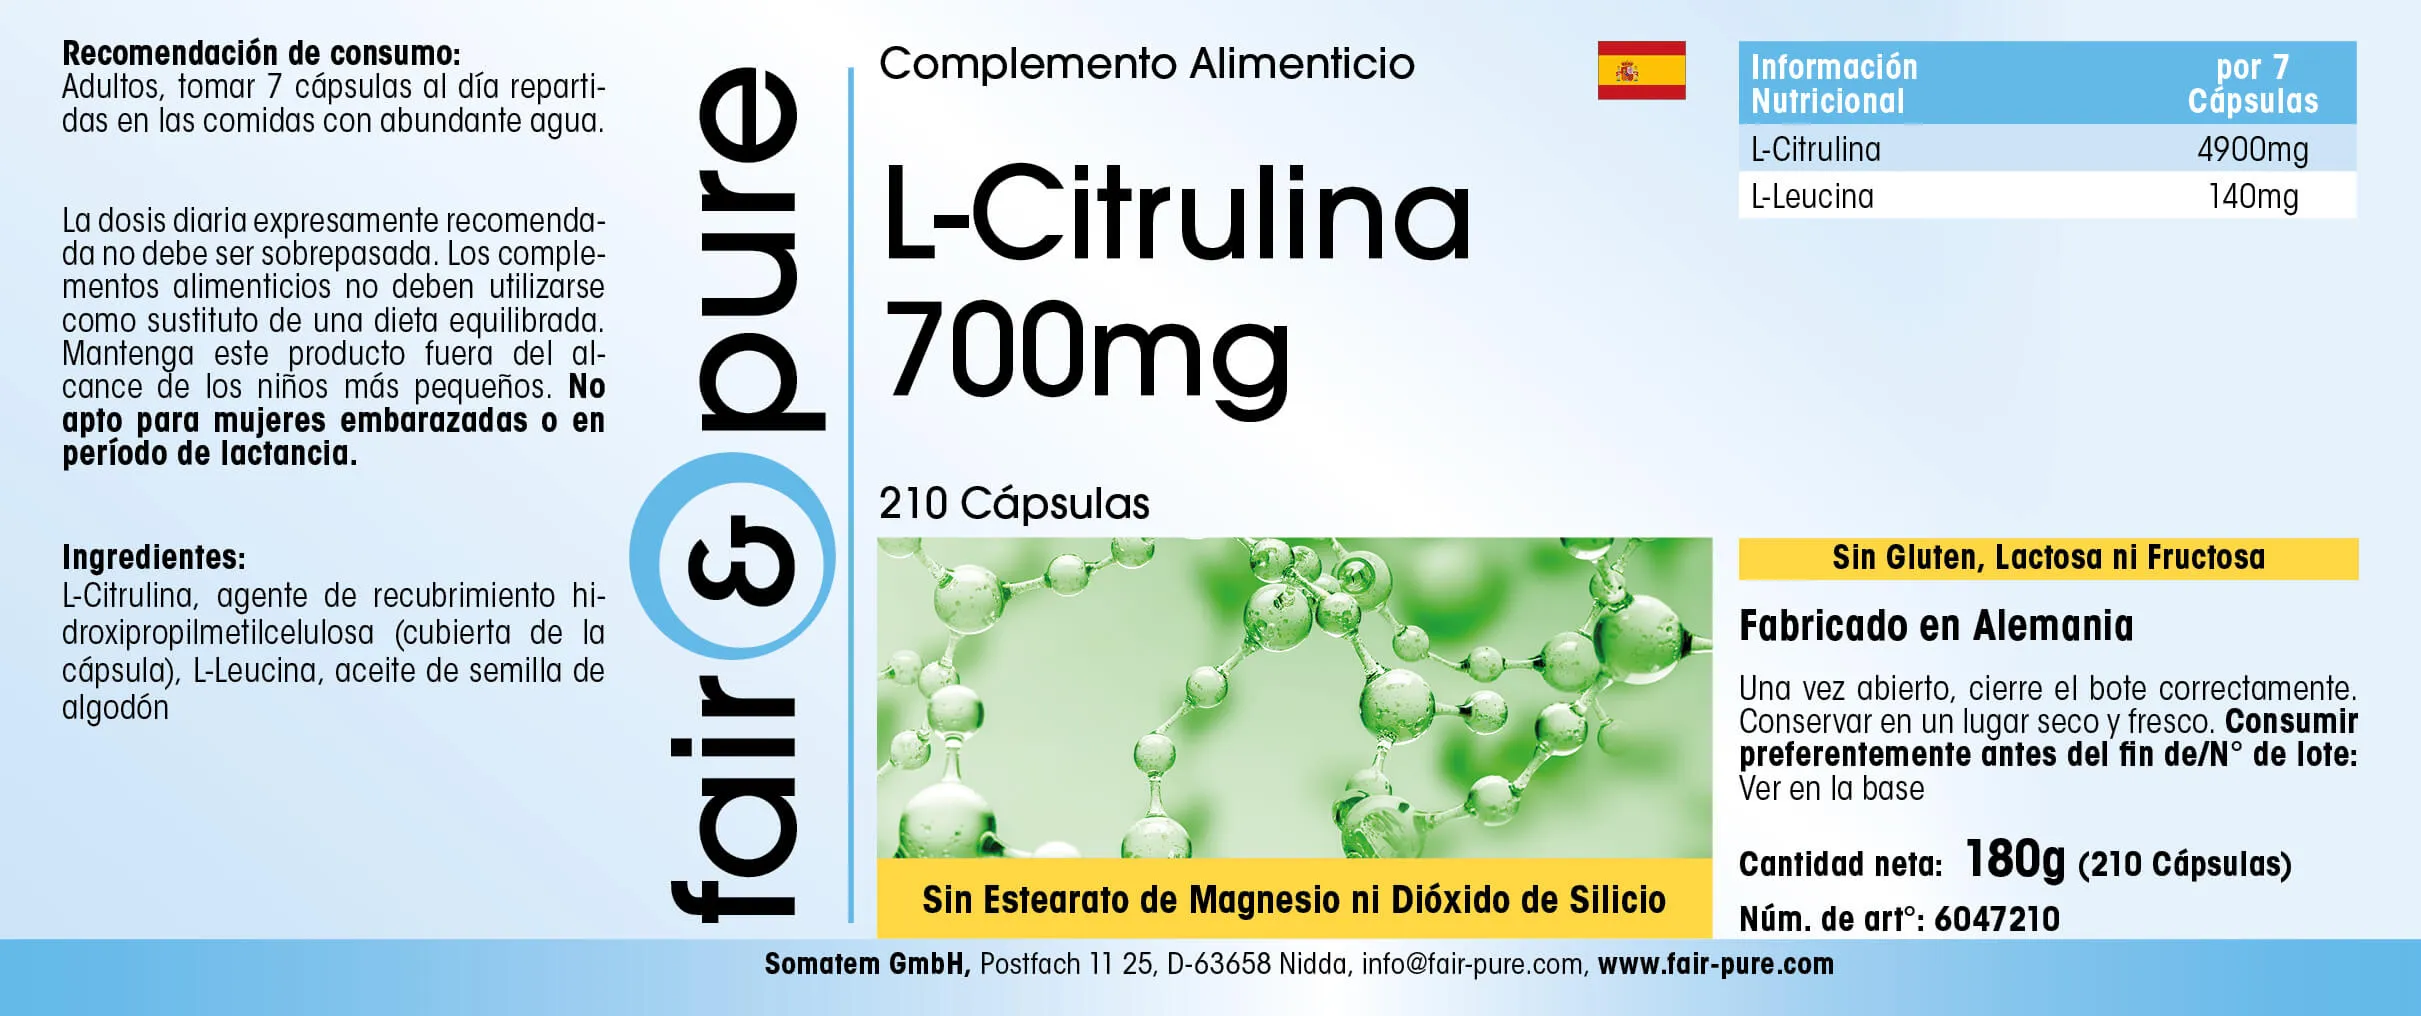 L-Citrullina 700mg